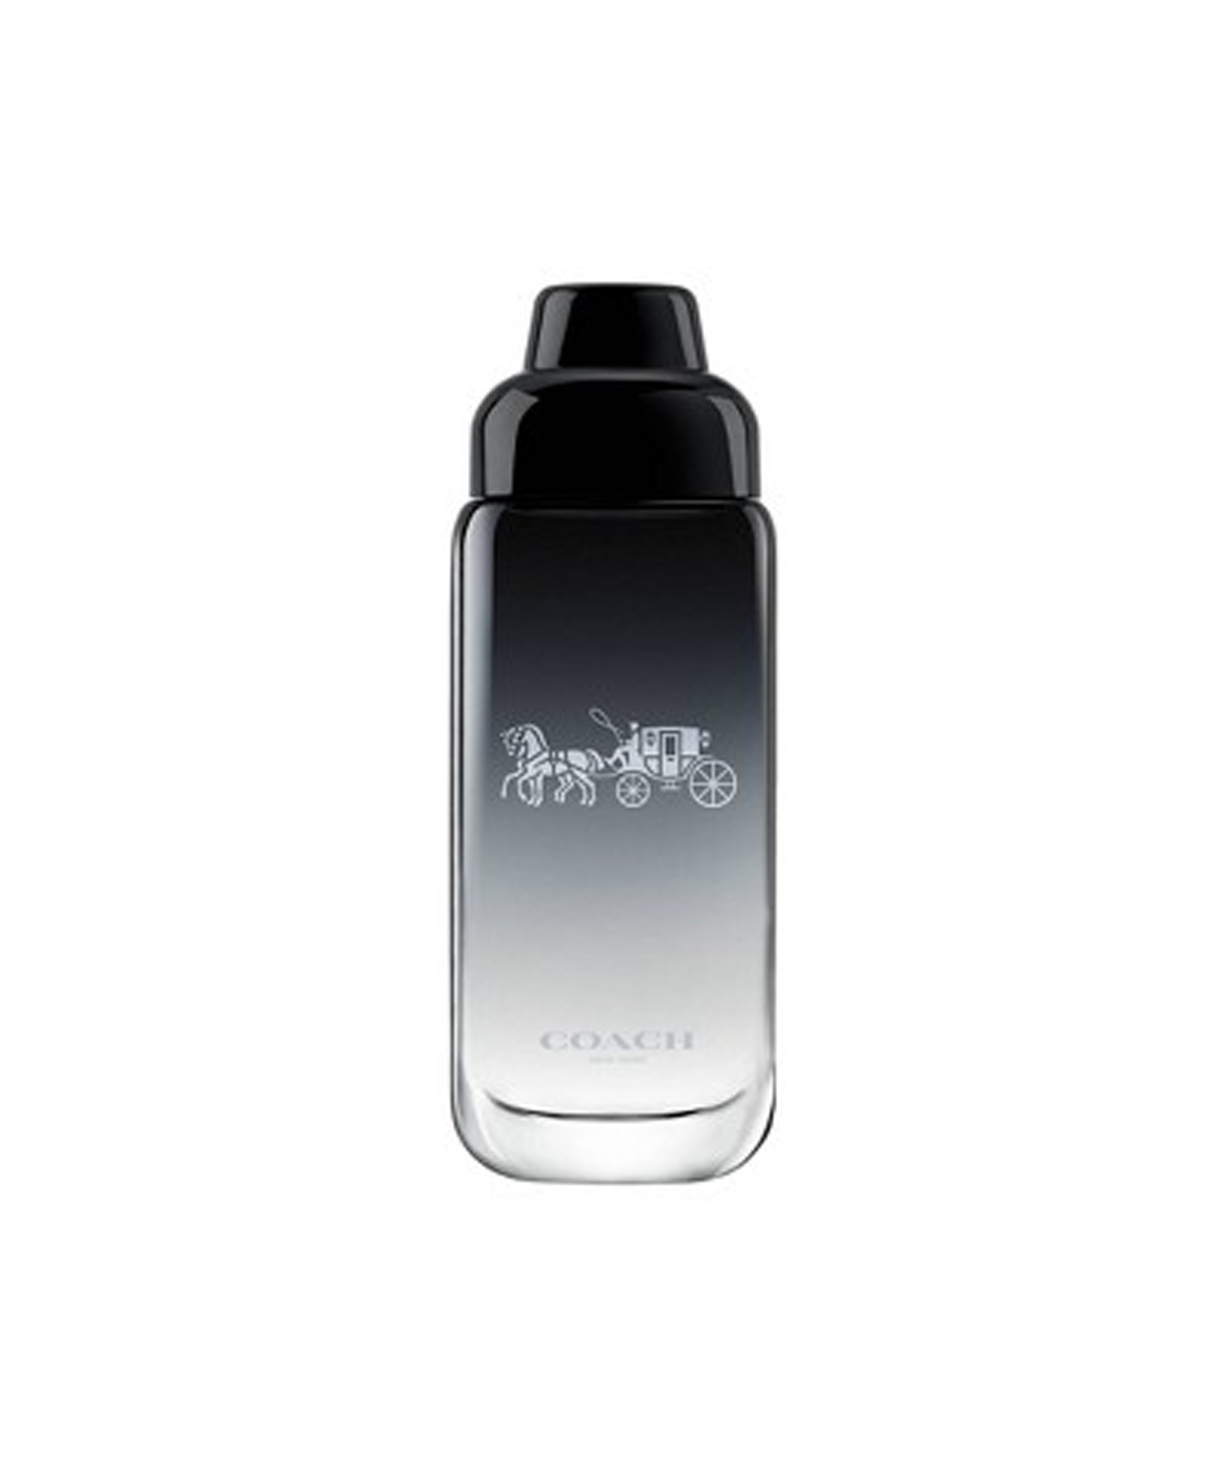 Perfume «Coach» for men, 15 ml